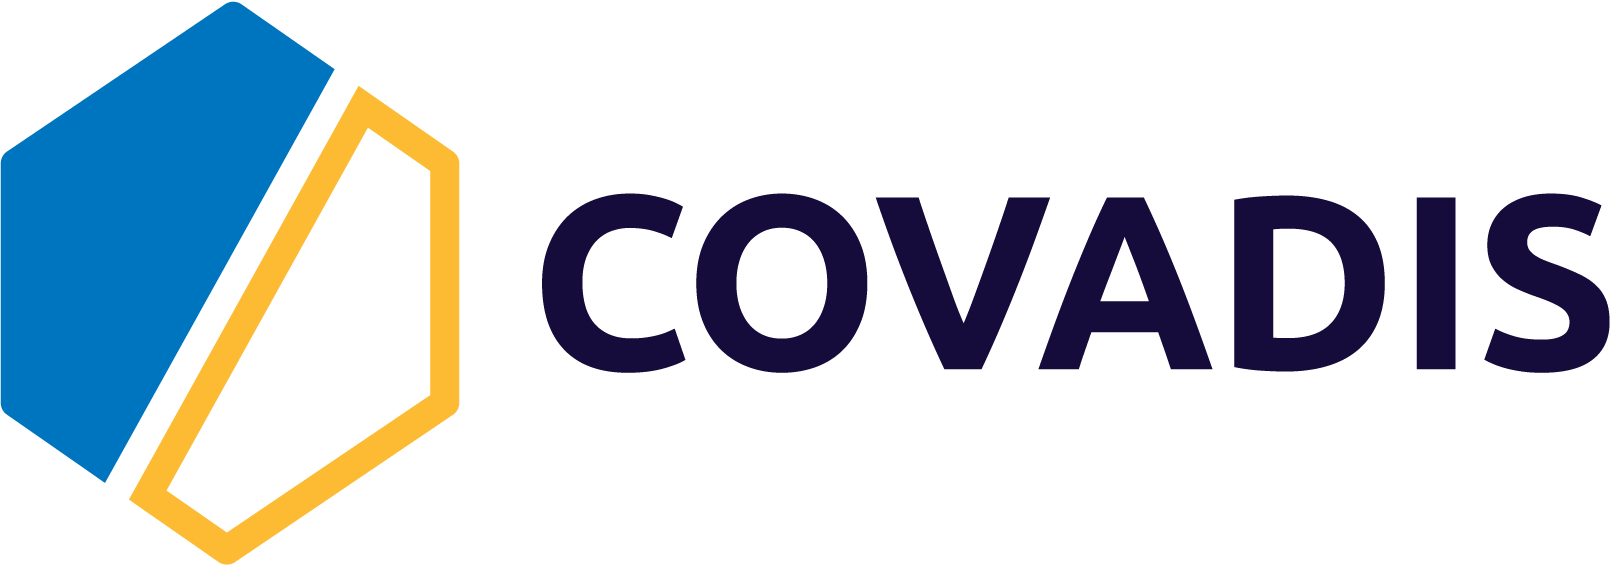 Covadis-logo